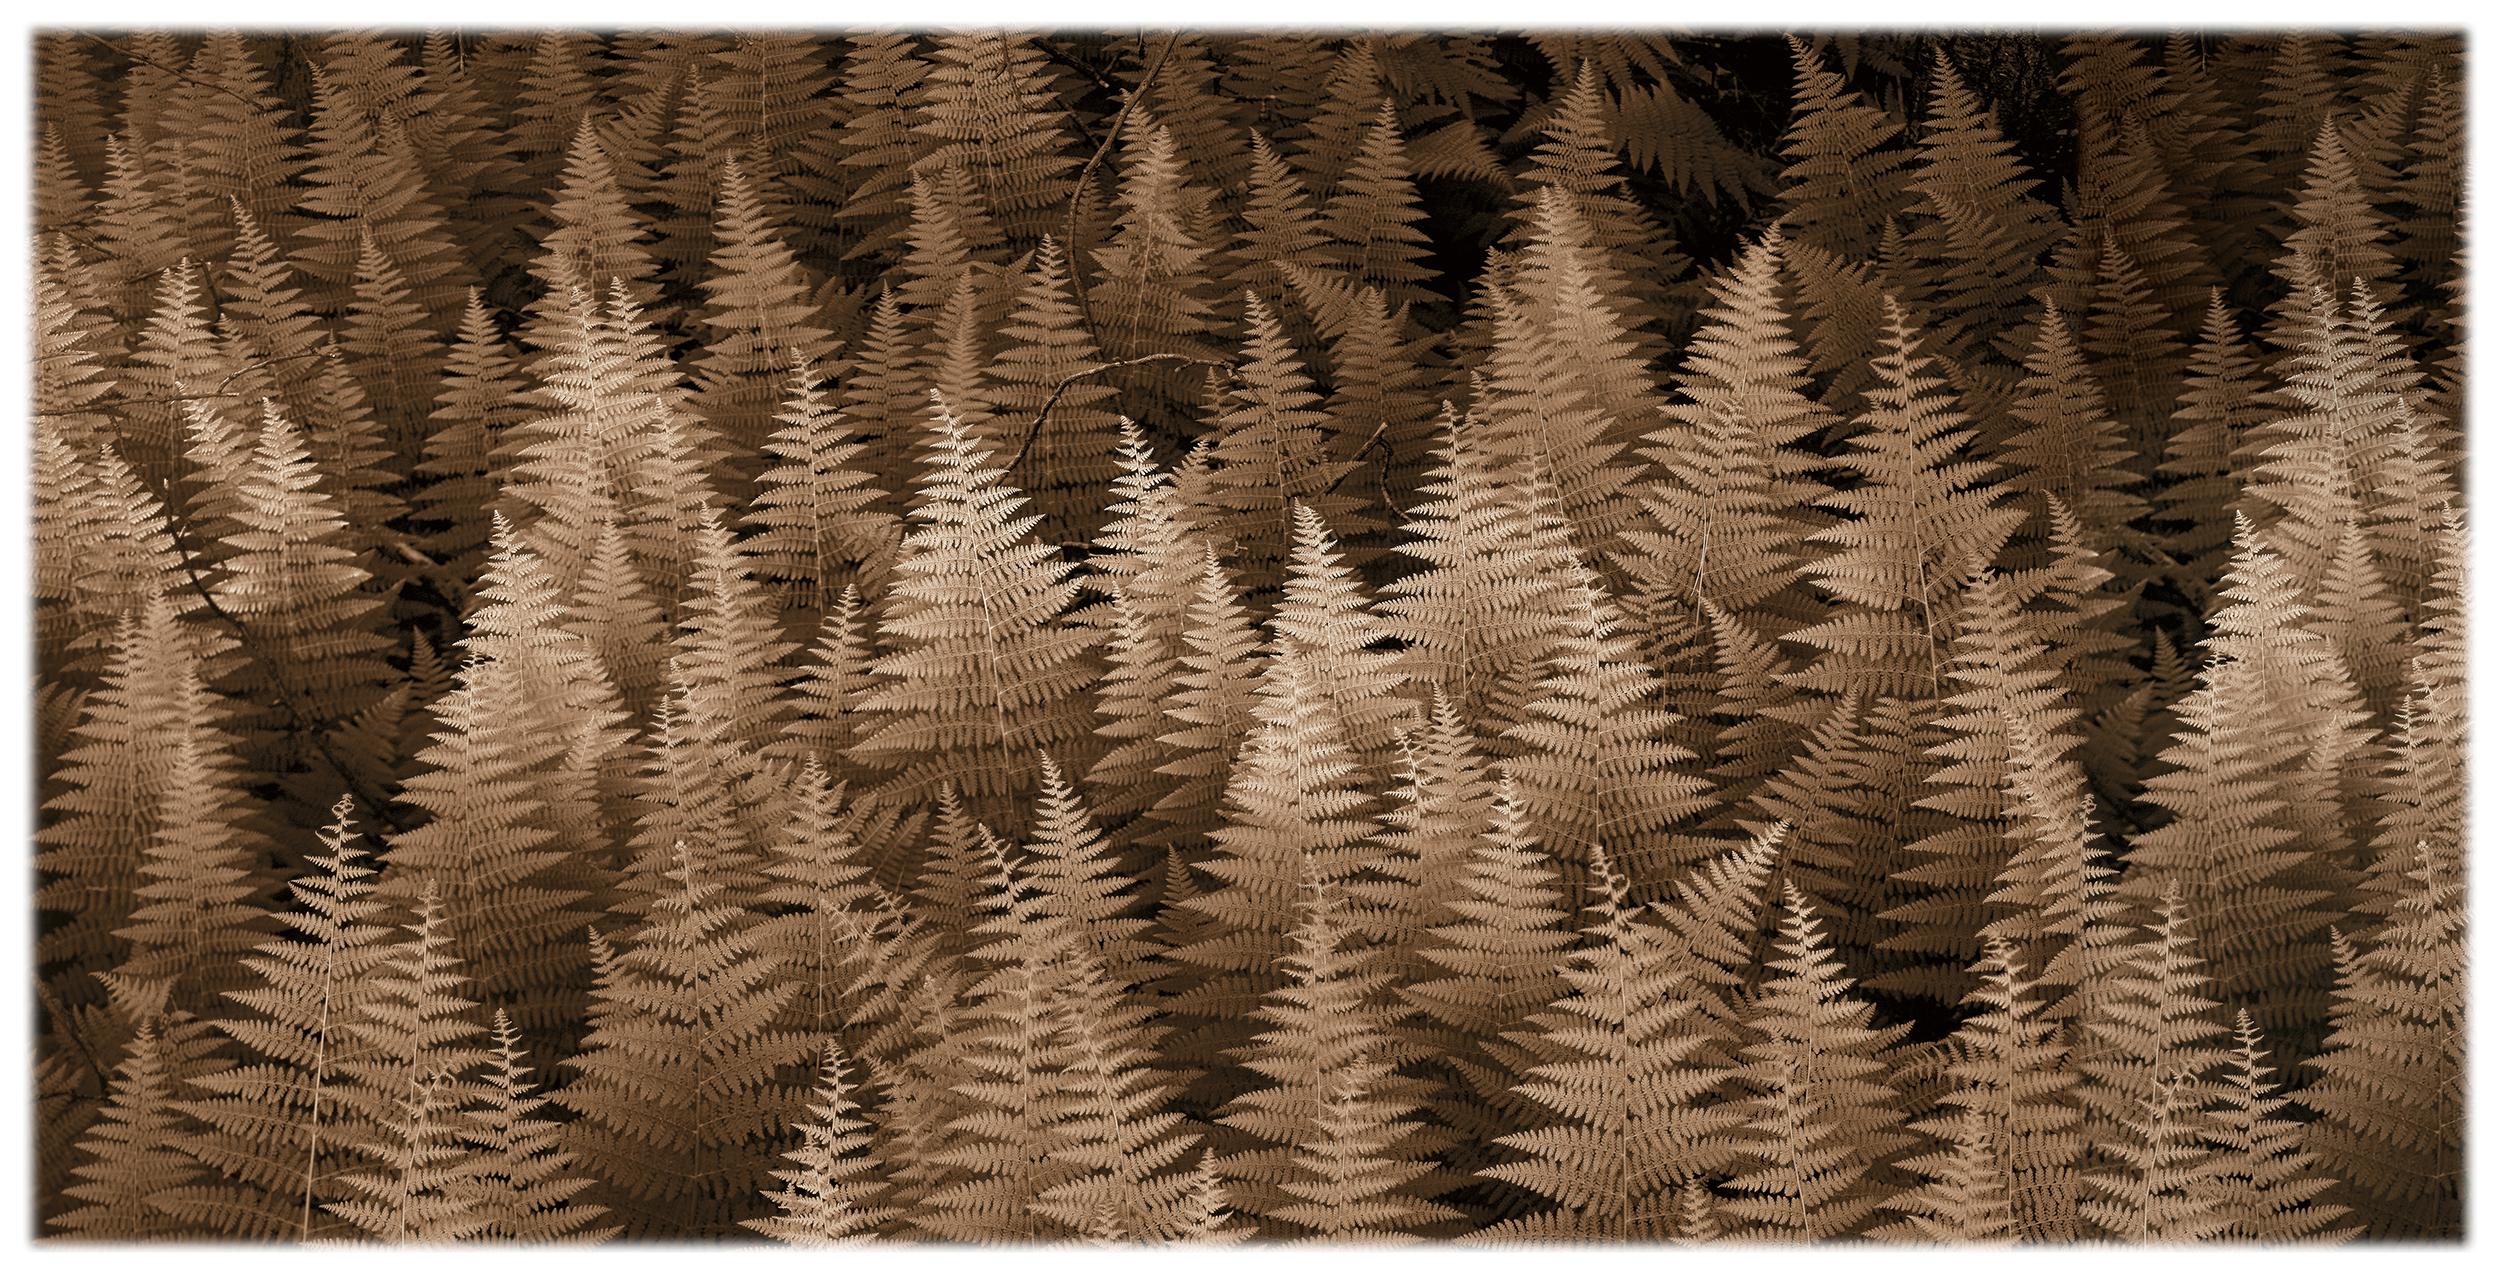 James Bleecker Color Photograph - Ferns No. 2 (Sepia-Tone Botanical Still-Life Photograph on Watercolor Paper)